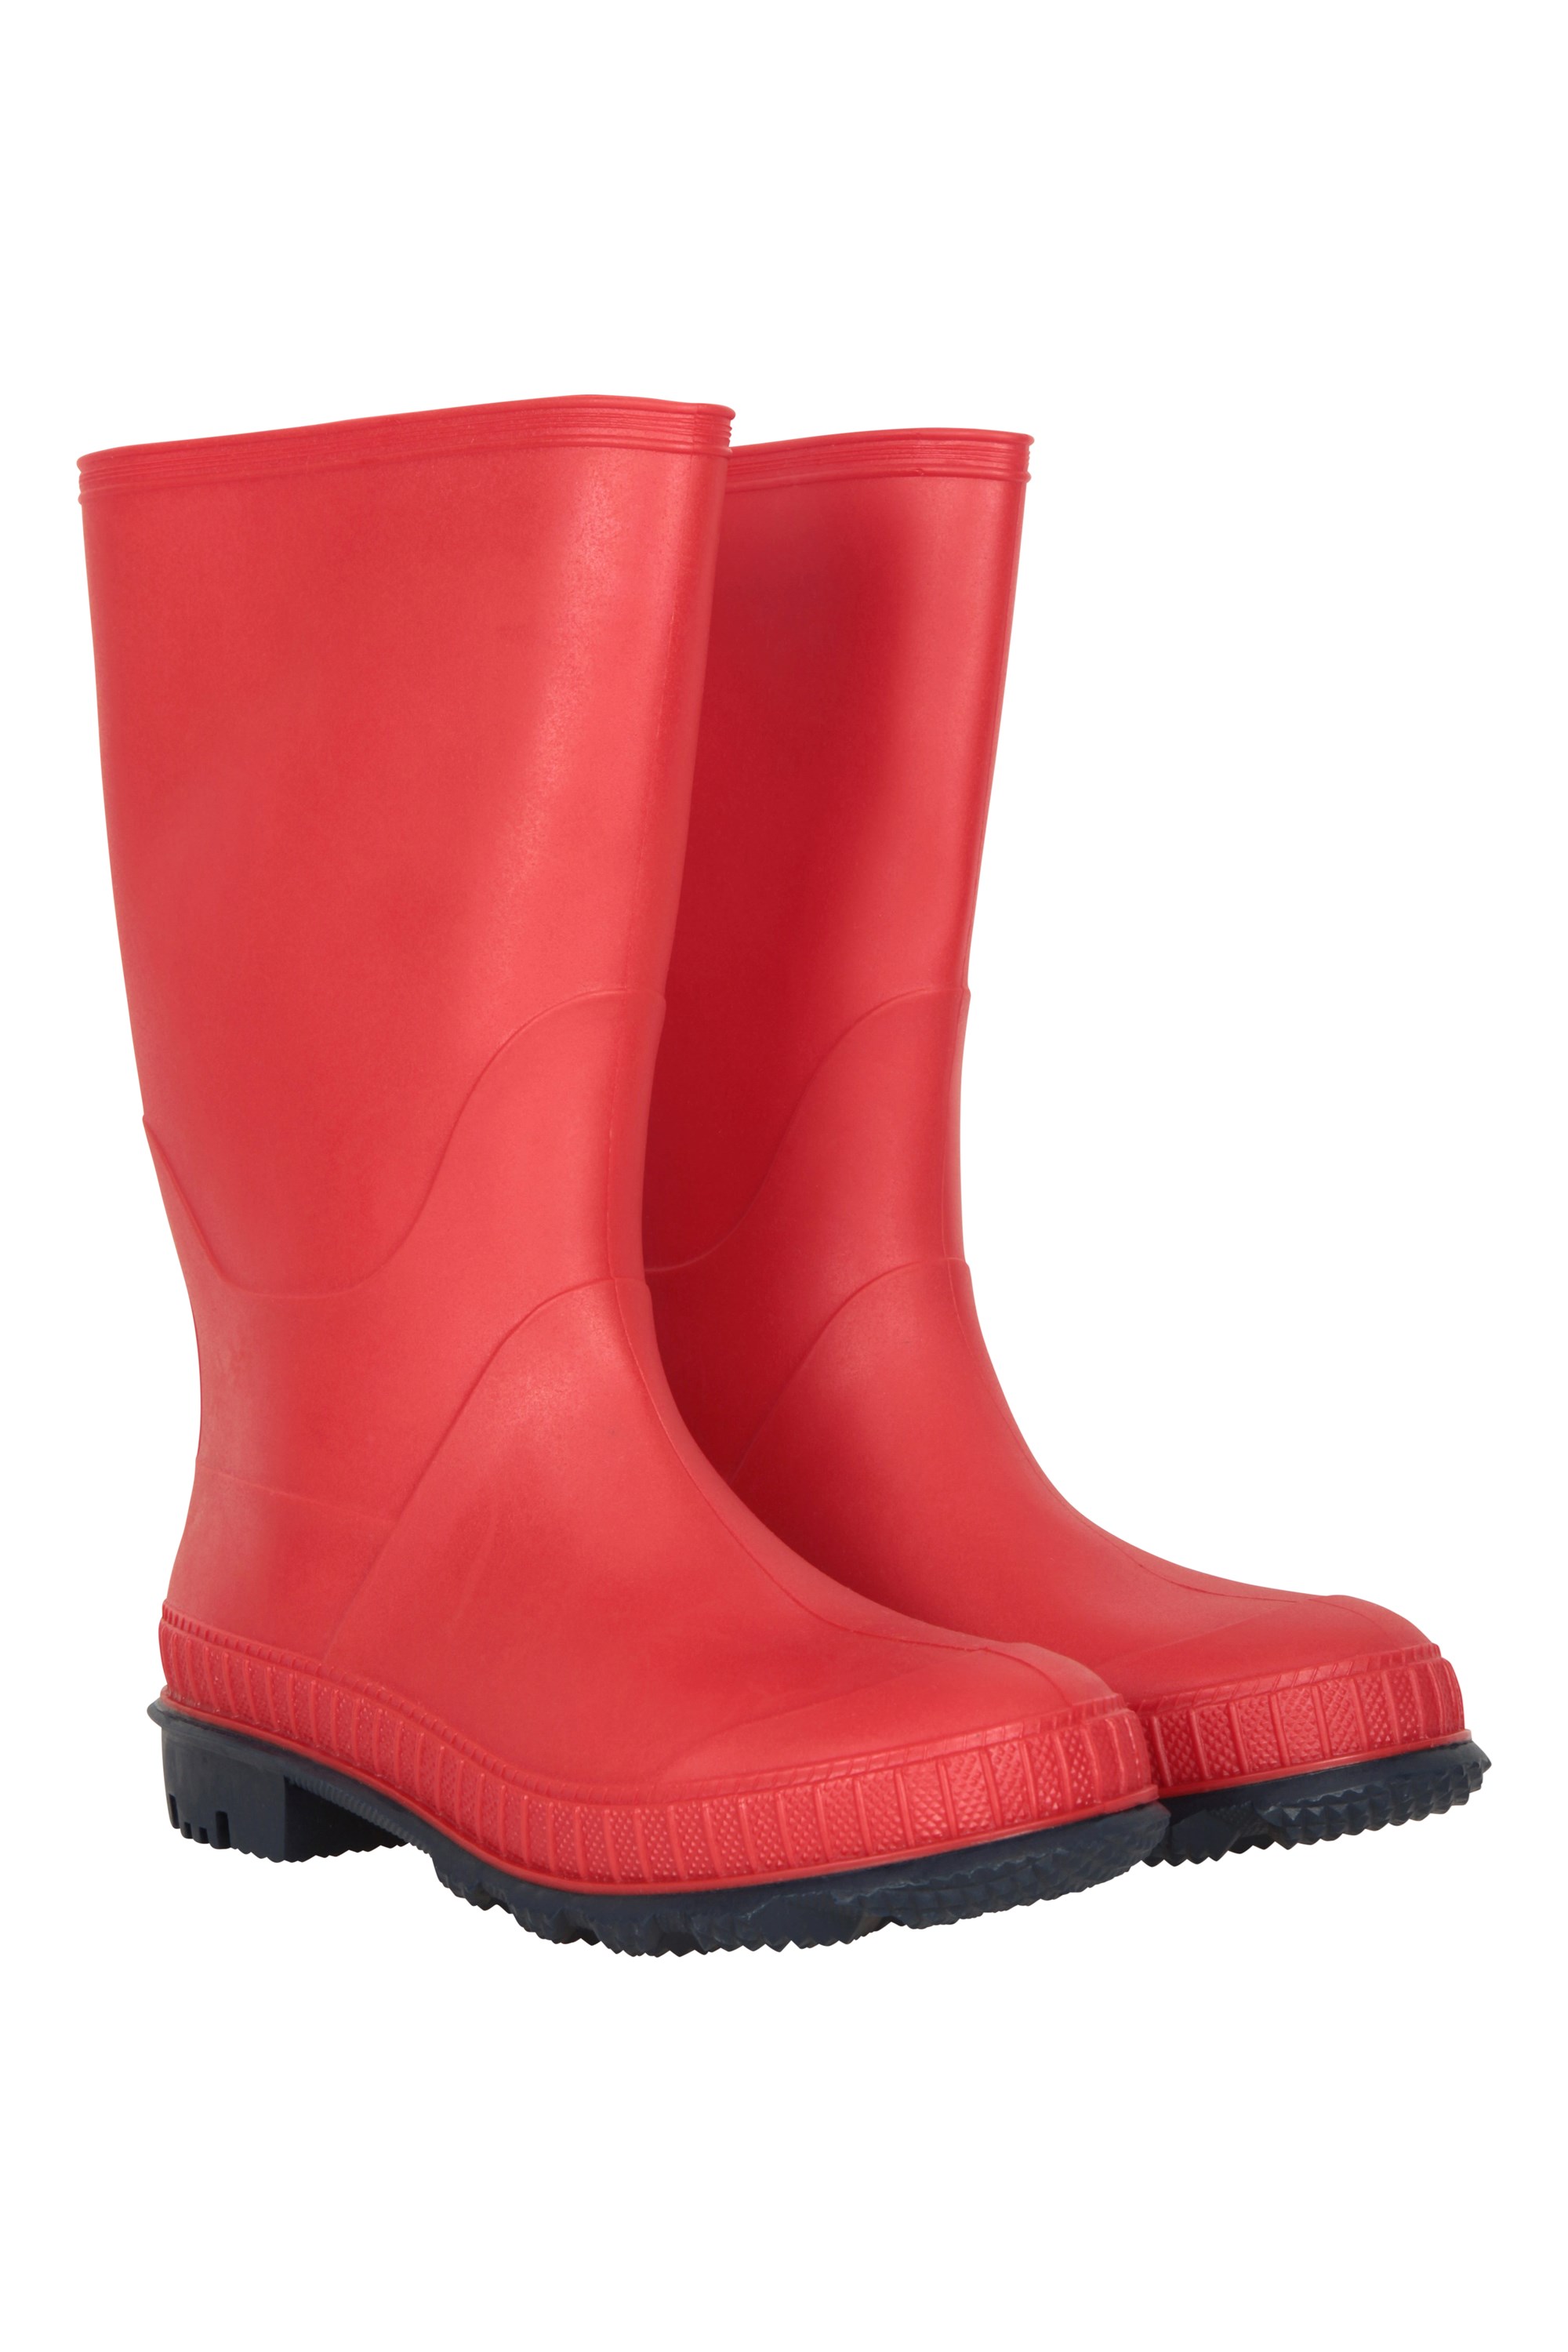 Womens Mens Short Leg Rainy Wellies Wellington Rain Boots Waterproof Shoes  Warm